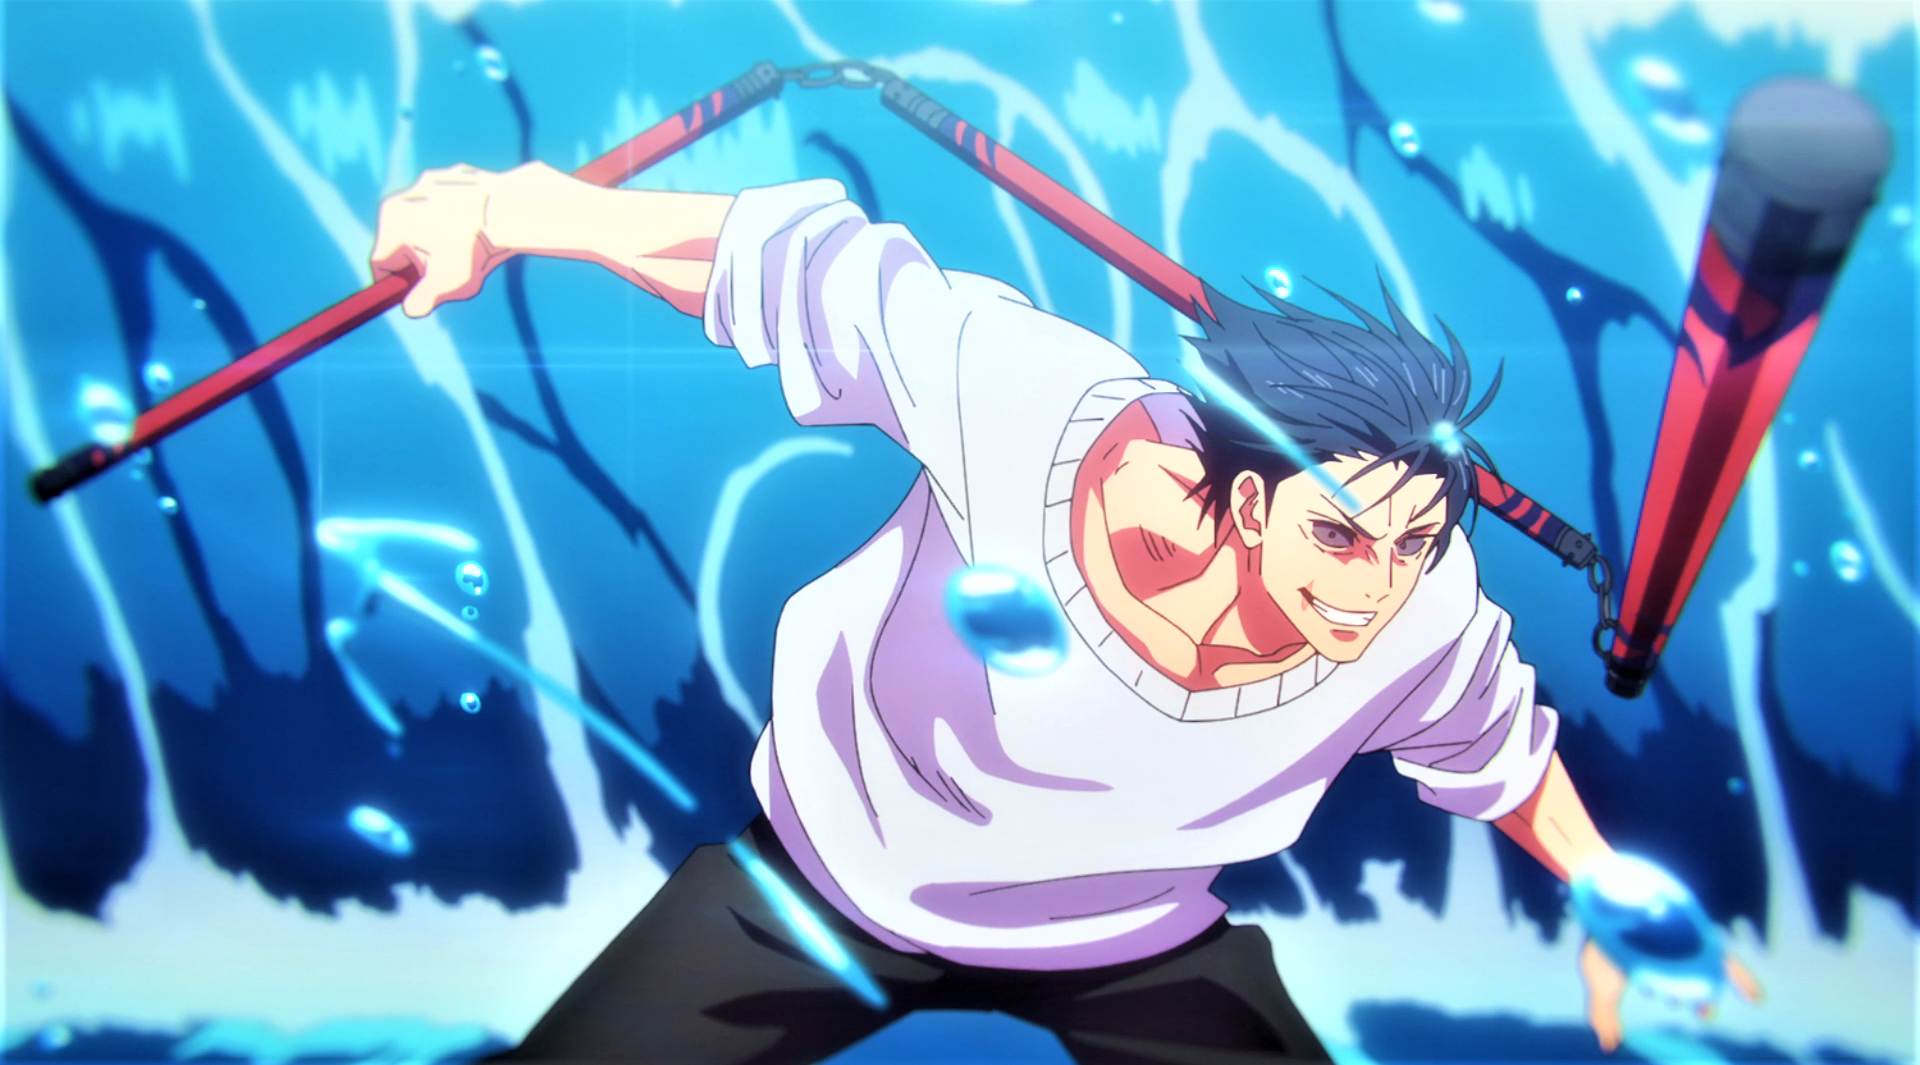 Anime 1920x1065 Jujutsu (martial art) Fushiguro Toji water Nunchucks sweater hair blowing in the wind anime Anime screenshot anime boys muscles black eyes water drops